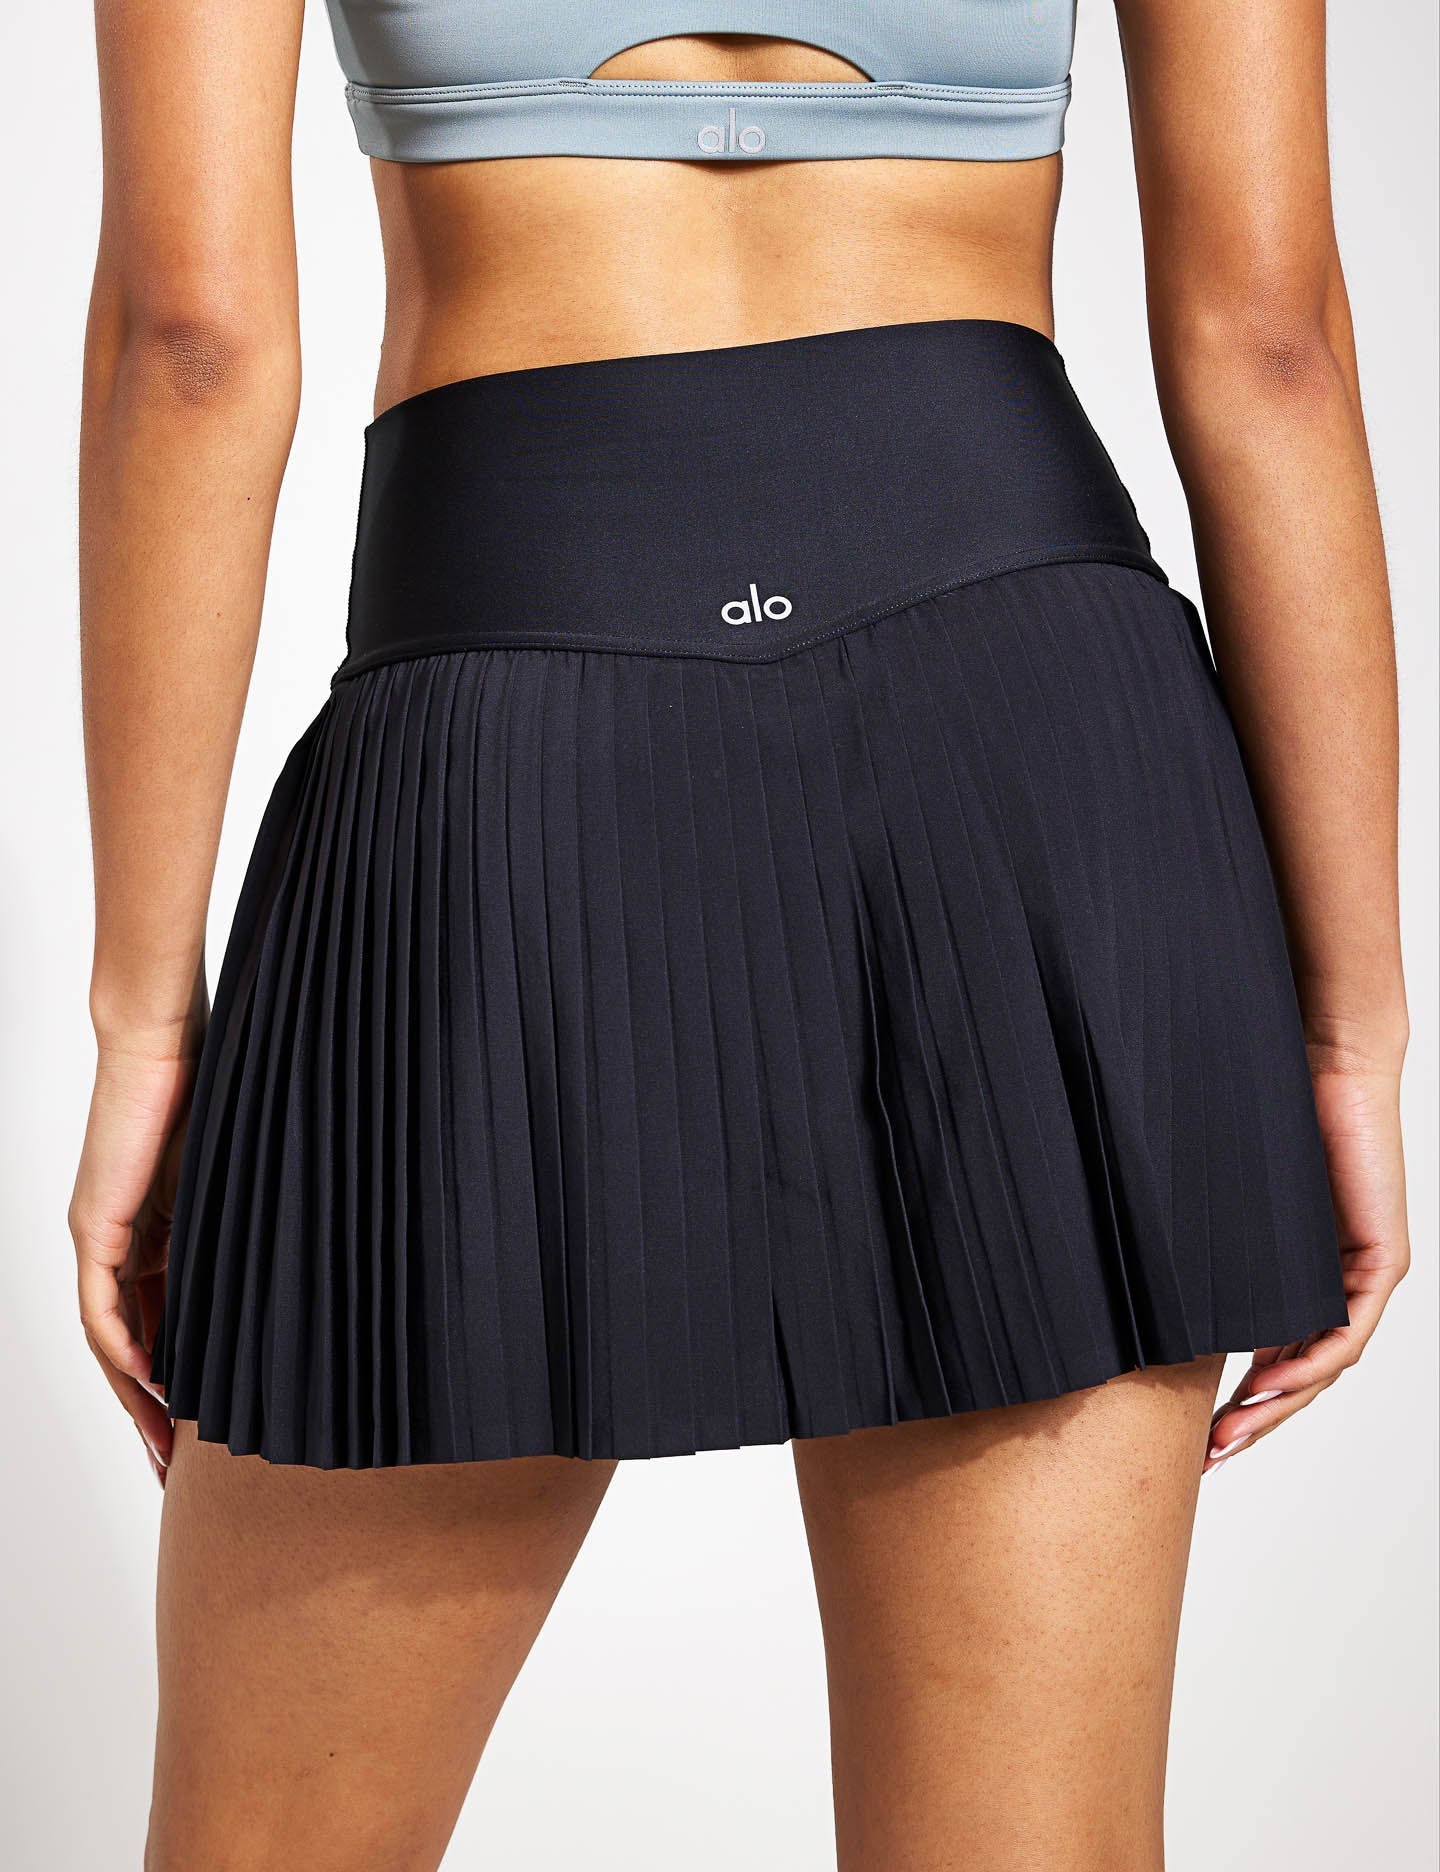 Grand Slam Tennis Skirt curated on LTK